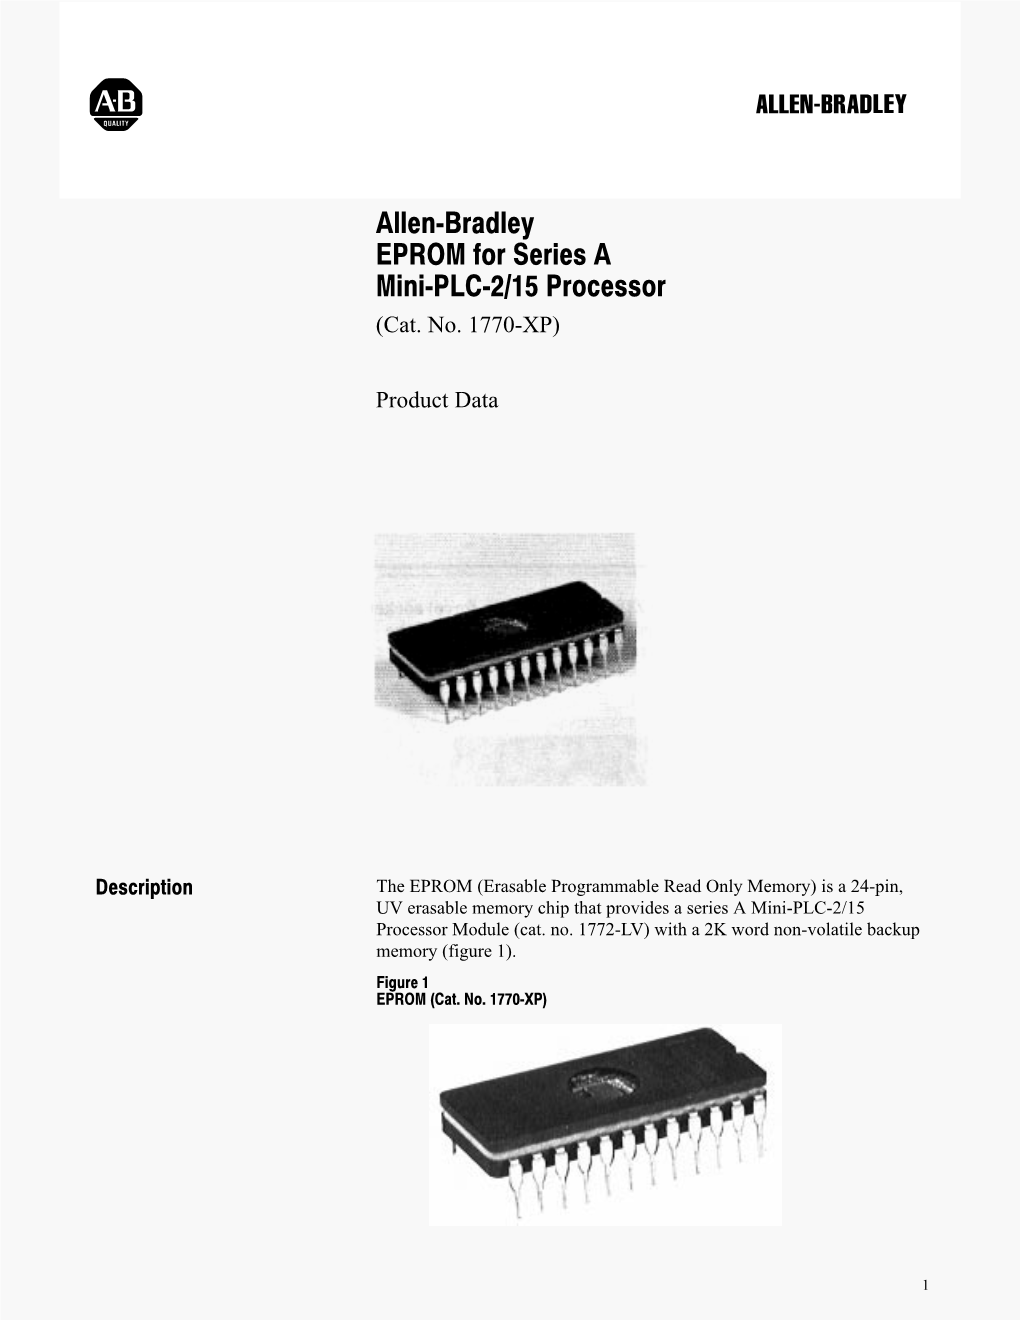 Allen Bradley EPROM for Series a Mini PLC 2/15 Processor